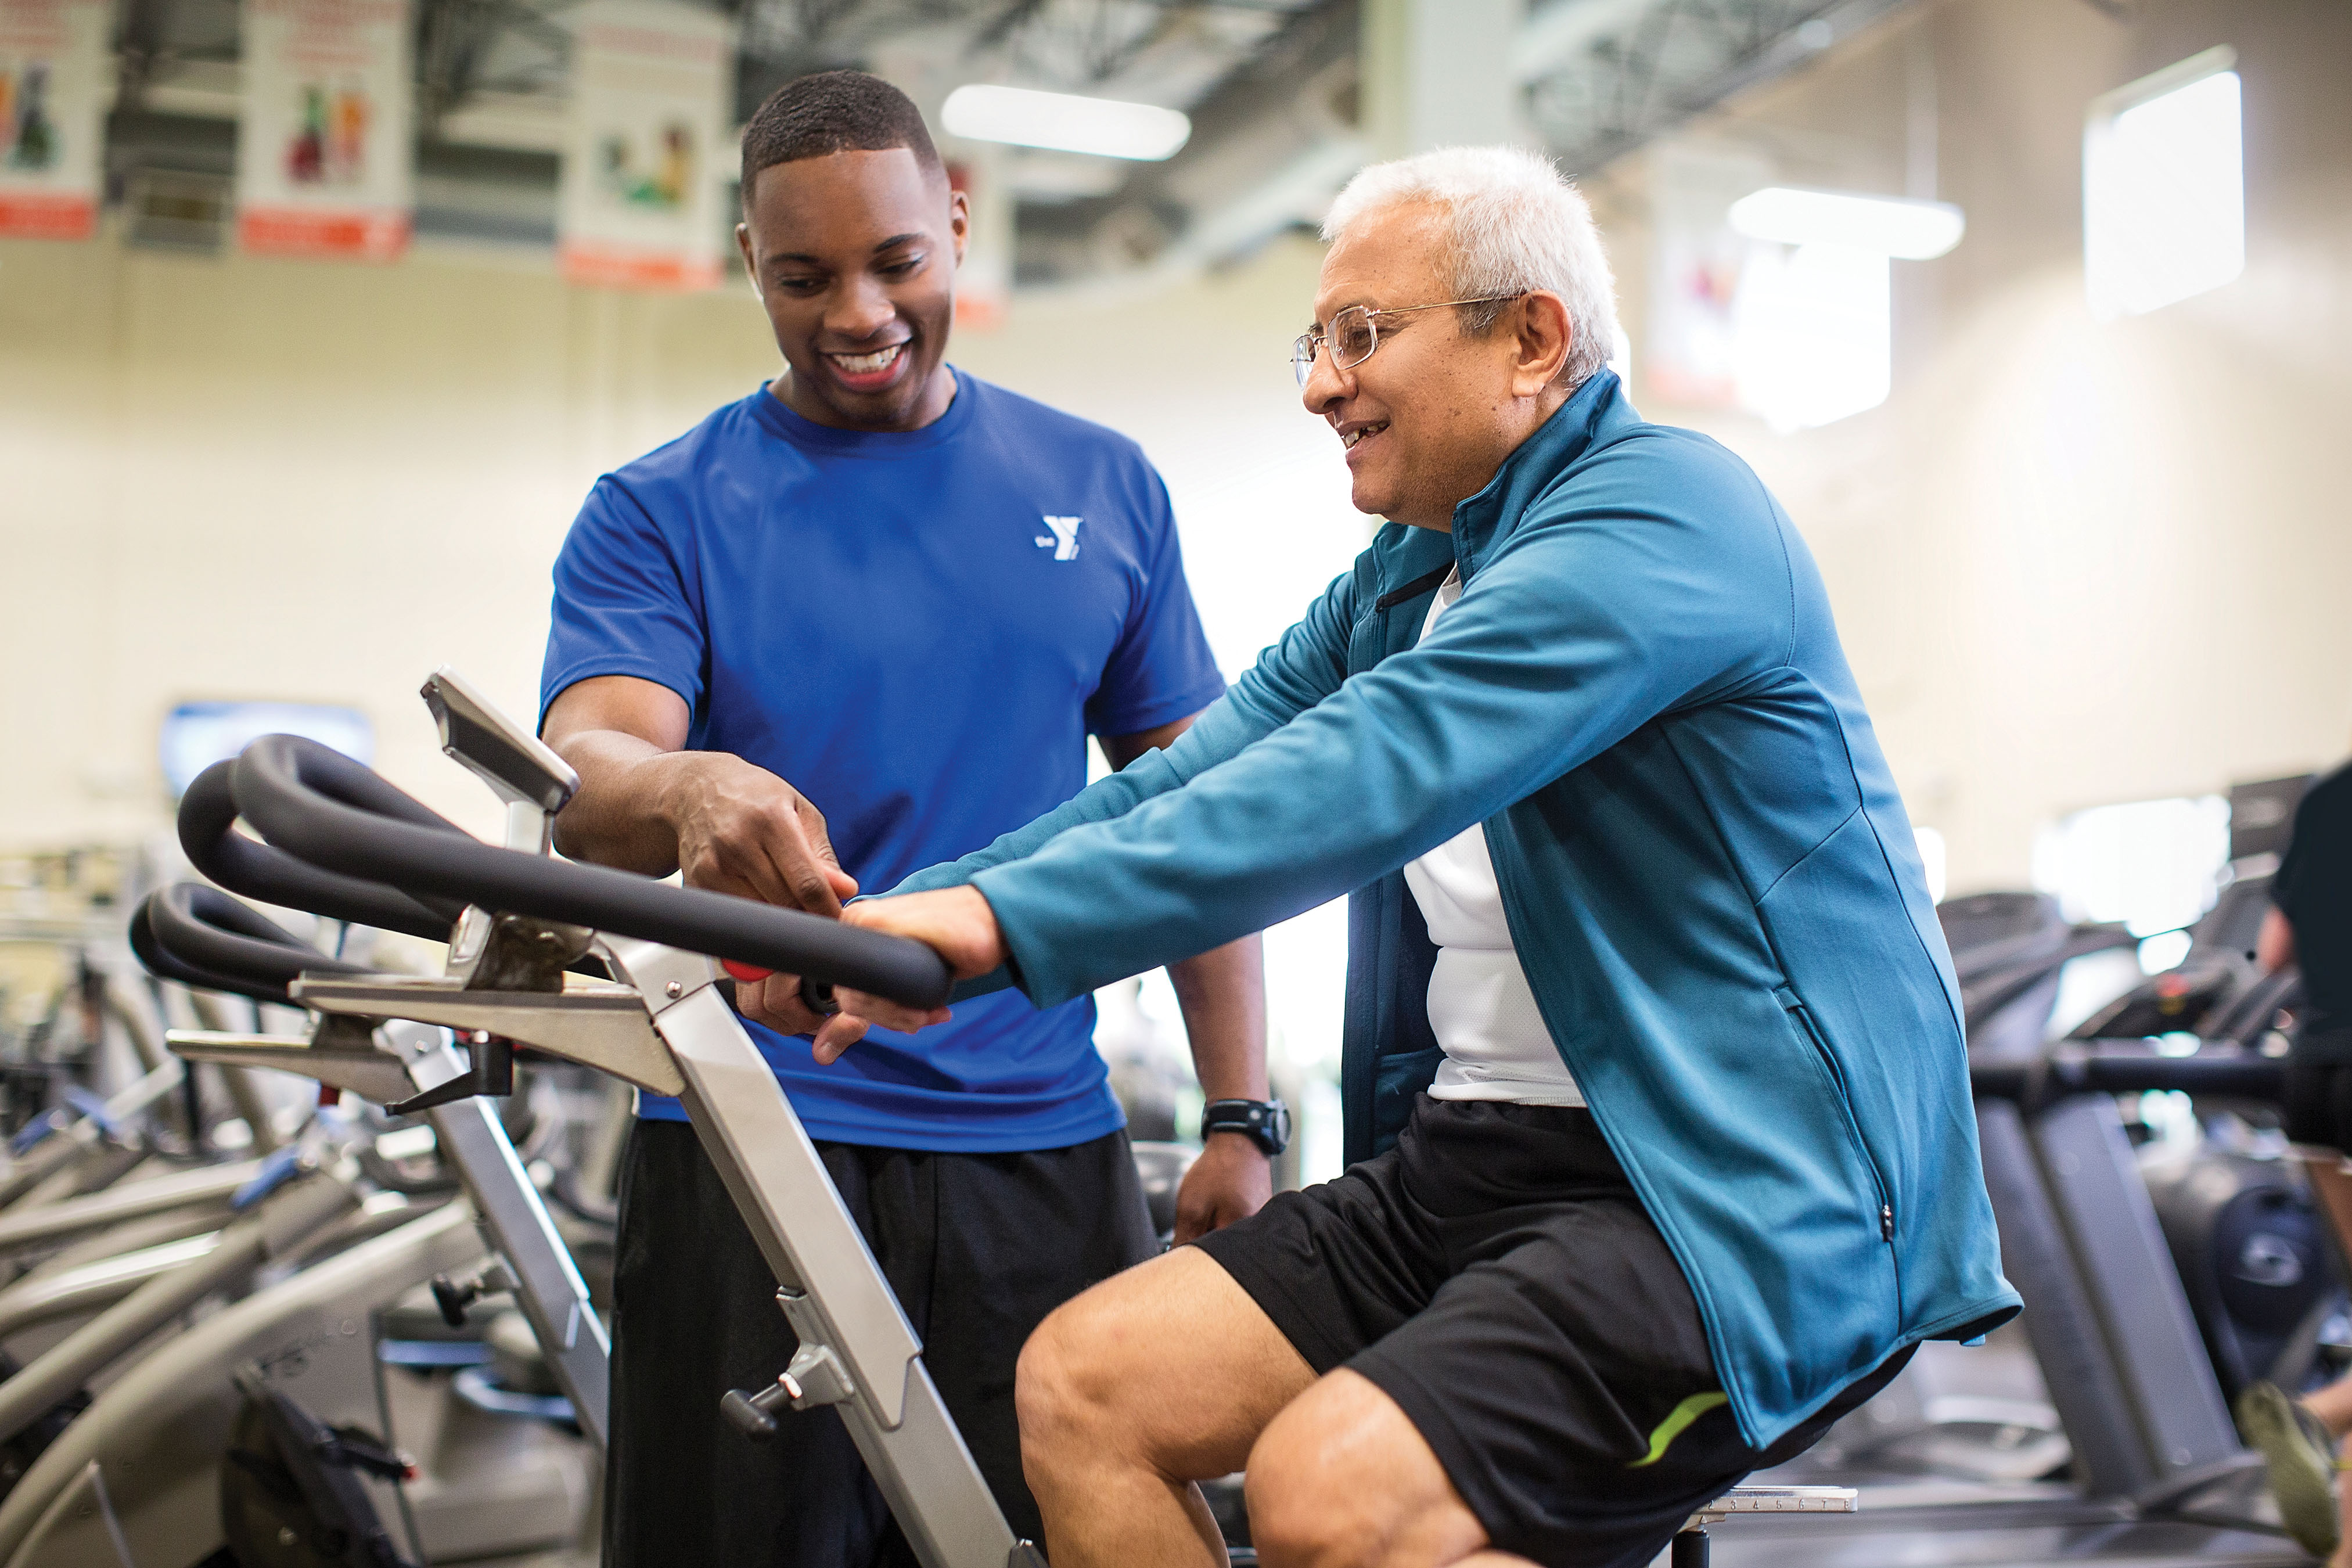 Cardiovascular equipment provides life-long benefits